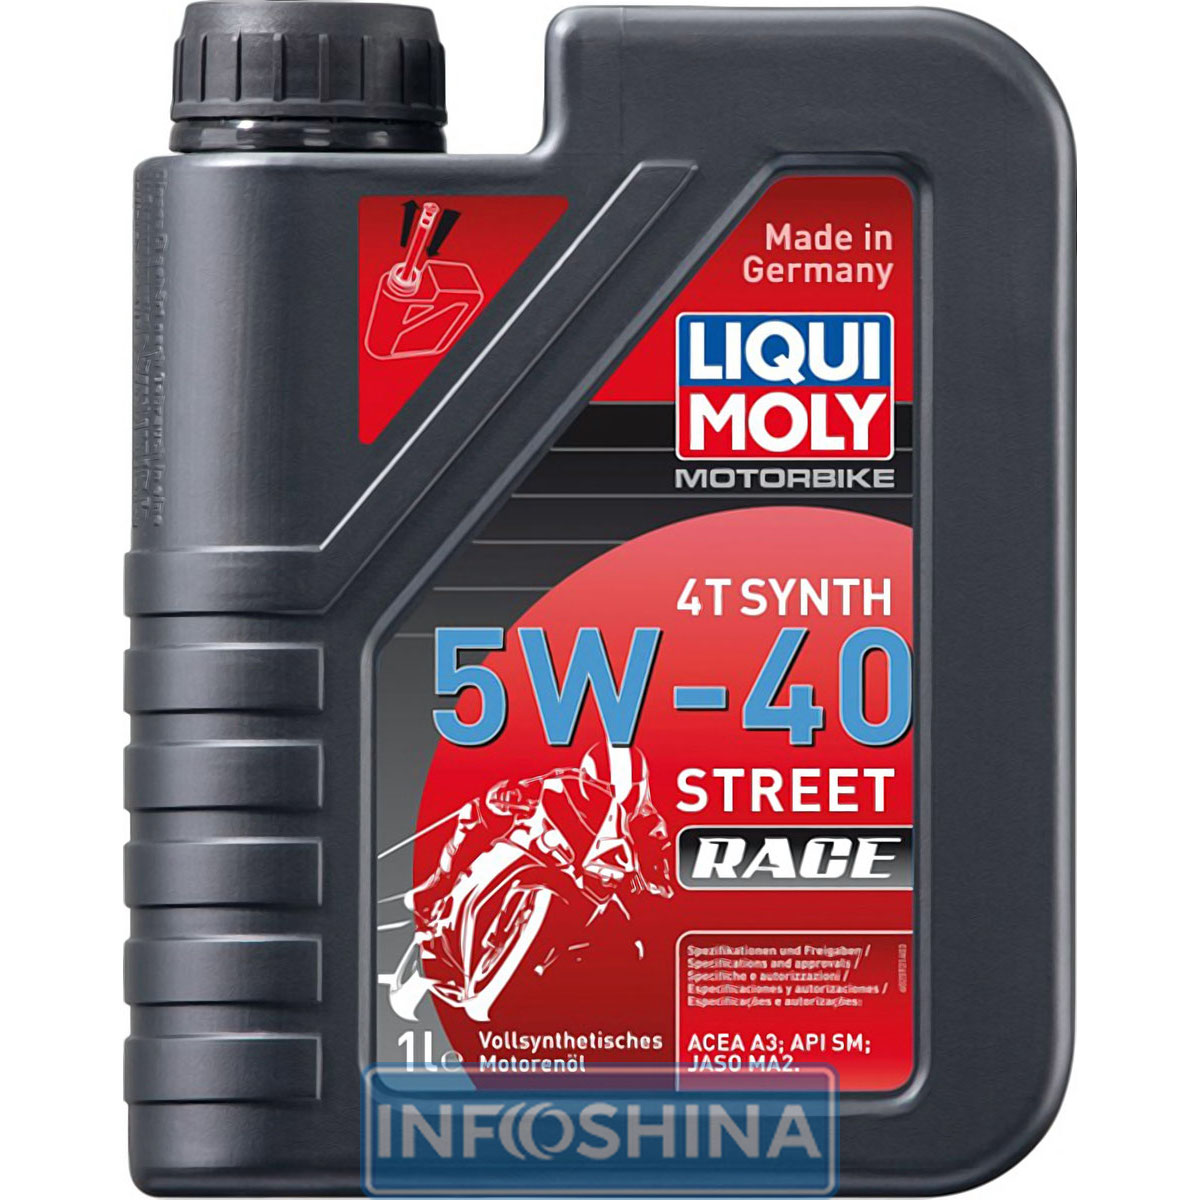 Купить масло Liqui Moly Motorbike 4T Synth Street Race 5W-40 (1л)